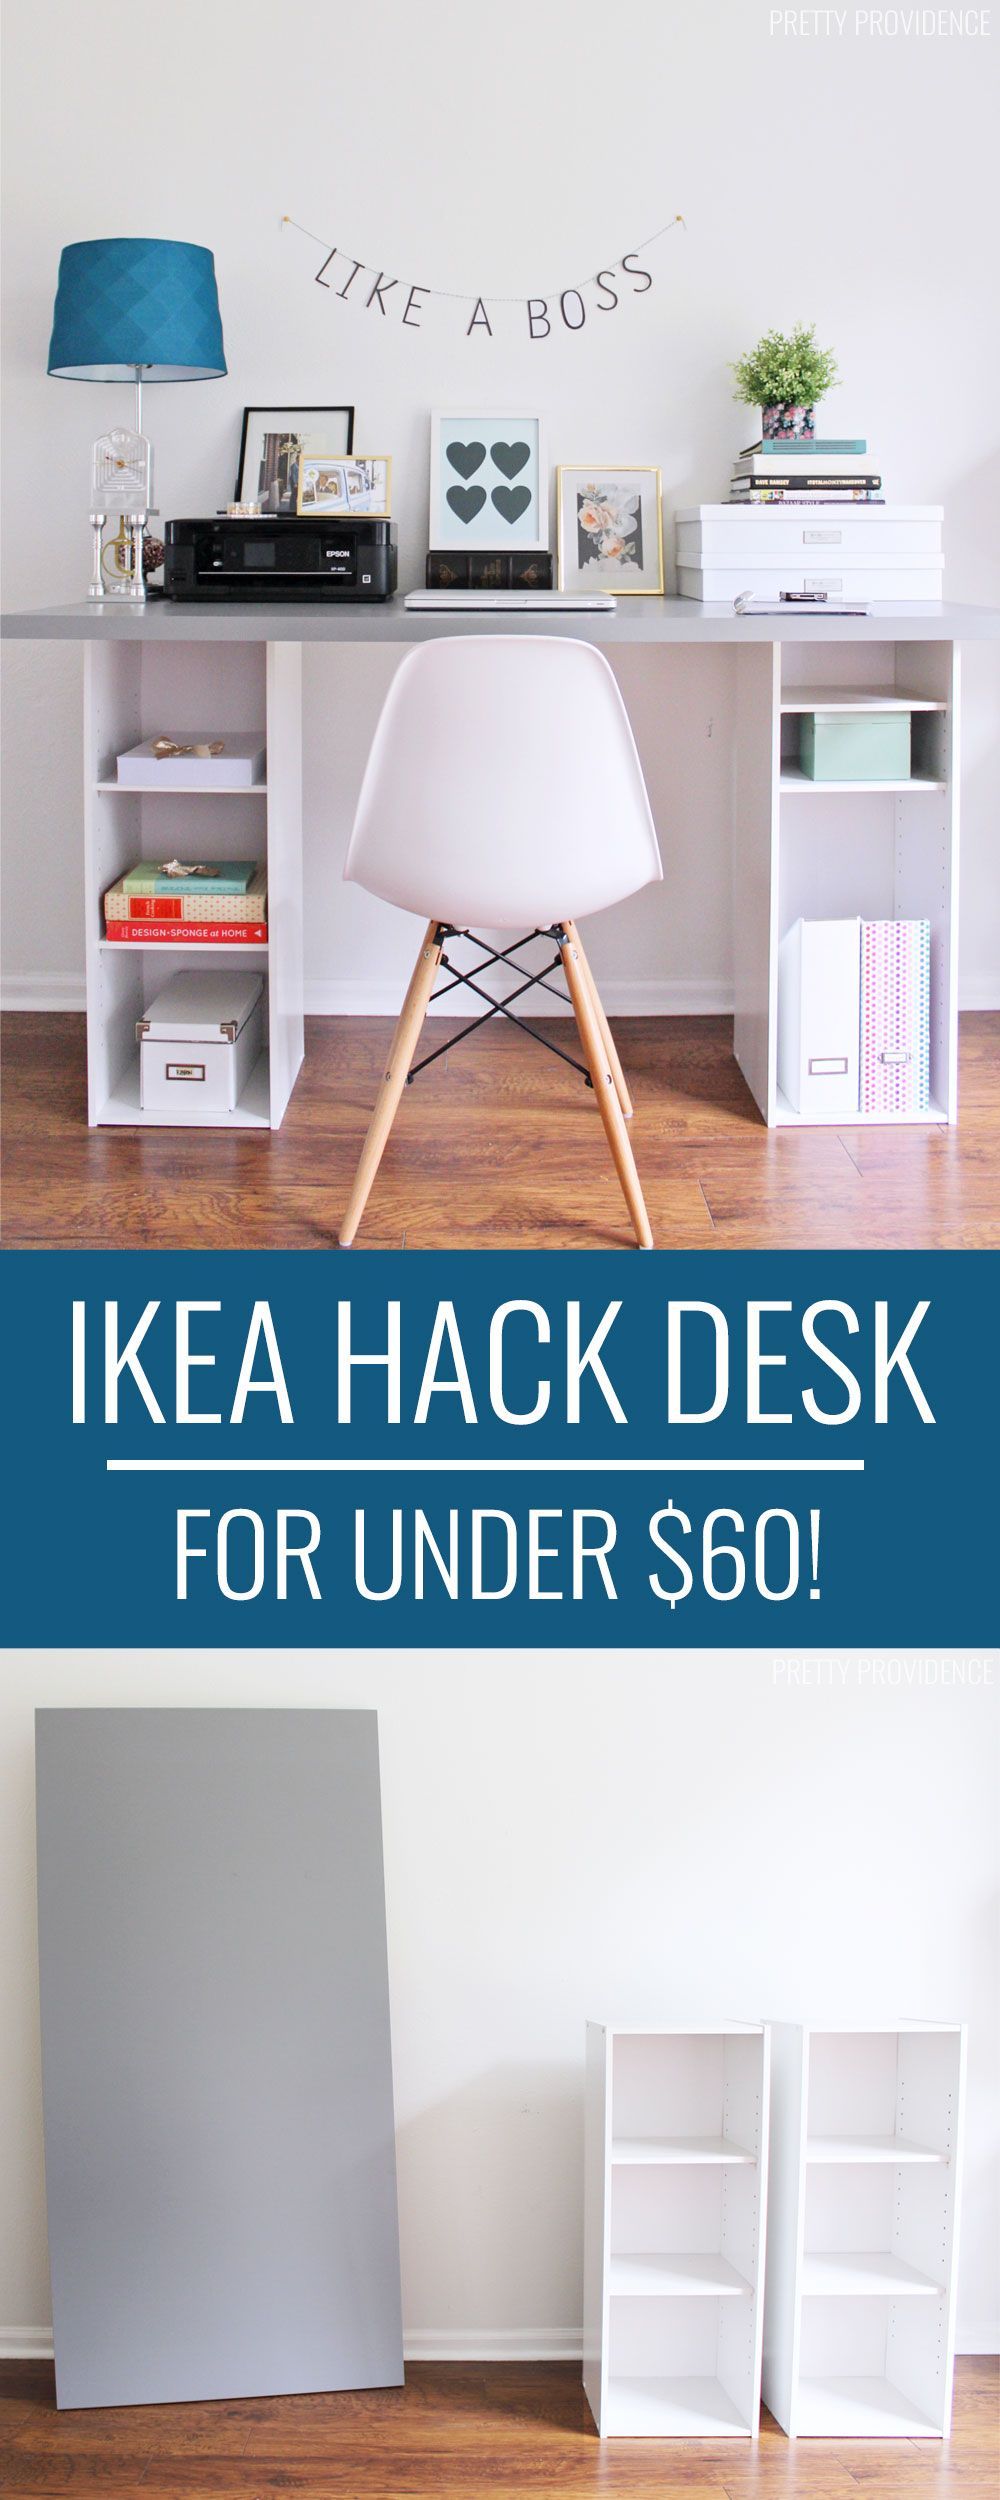 IKEA HACK Desk with Storage Shelves - Pretty Providence - IKEA HACK Desk with Storage Shelves - Pretty Providence -   15 diy Apartment desk ideas